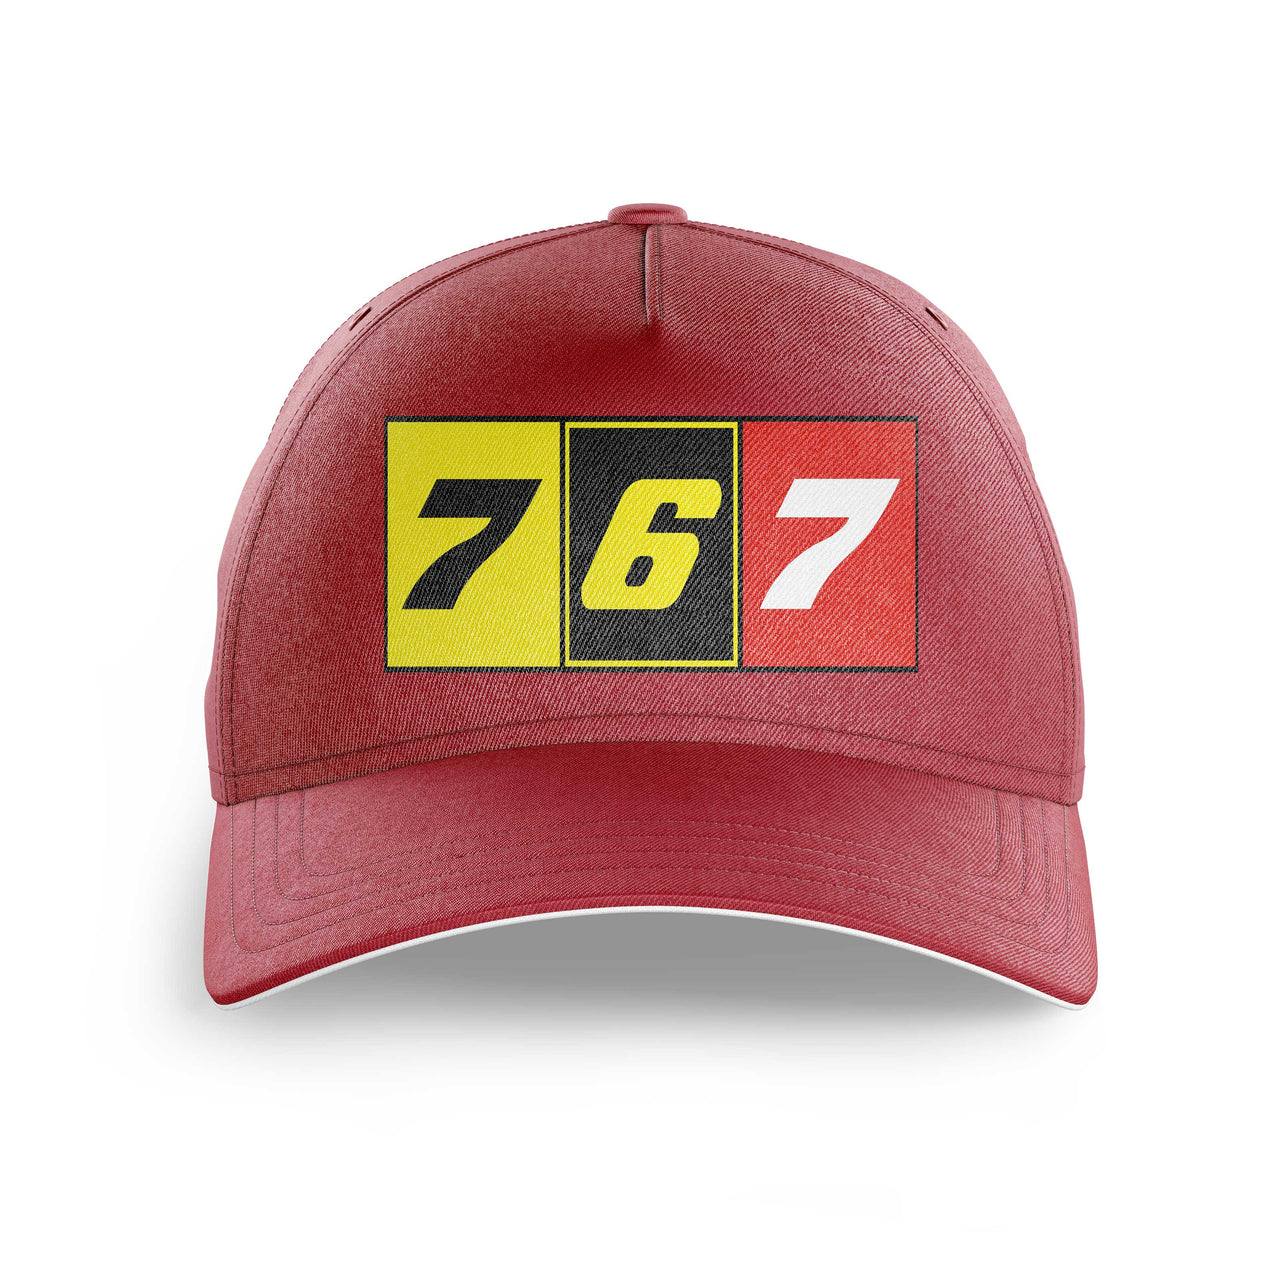 Flat Colourful 767 Printed Hats